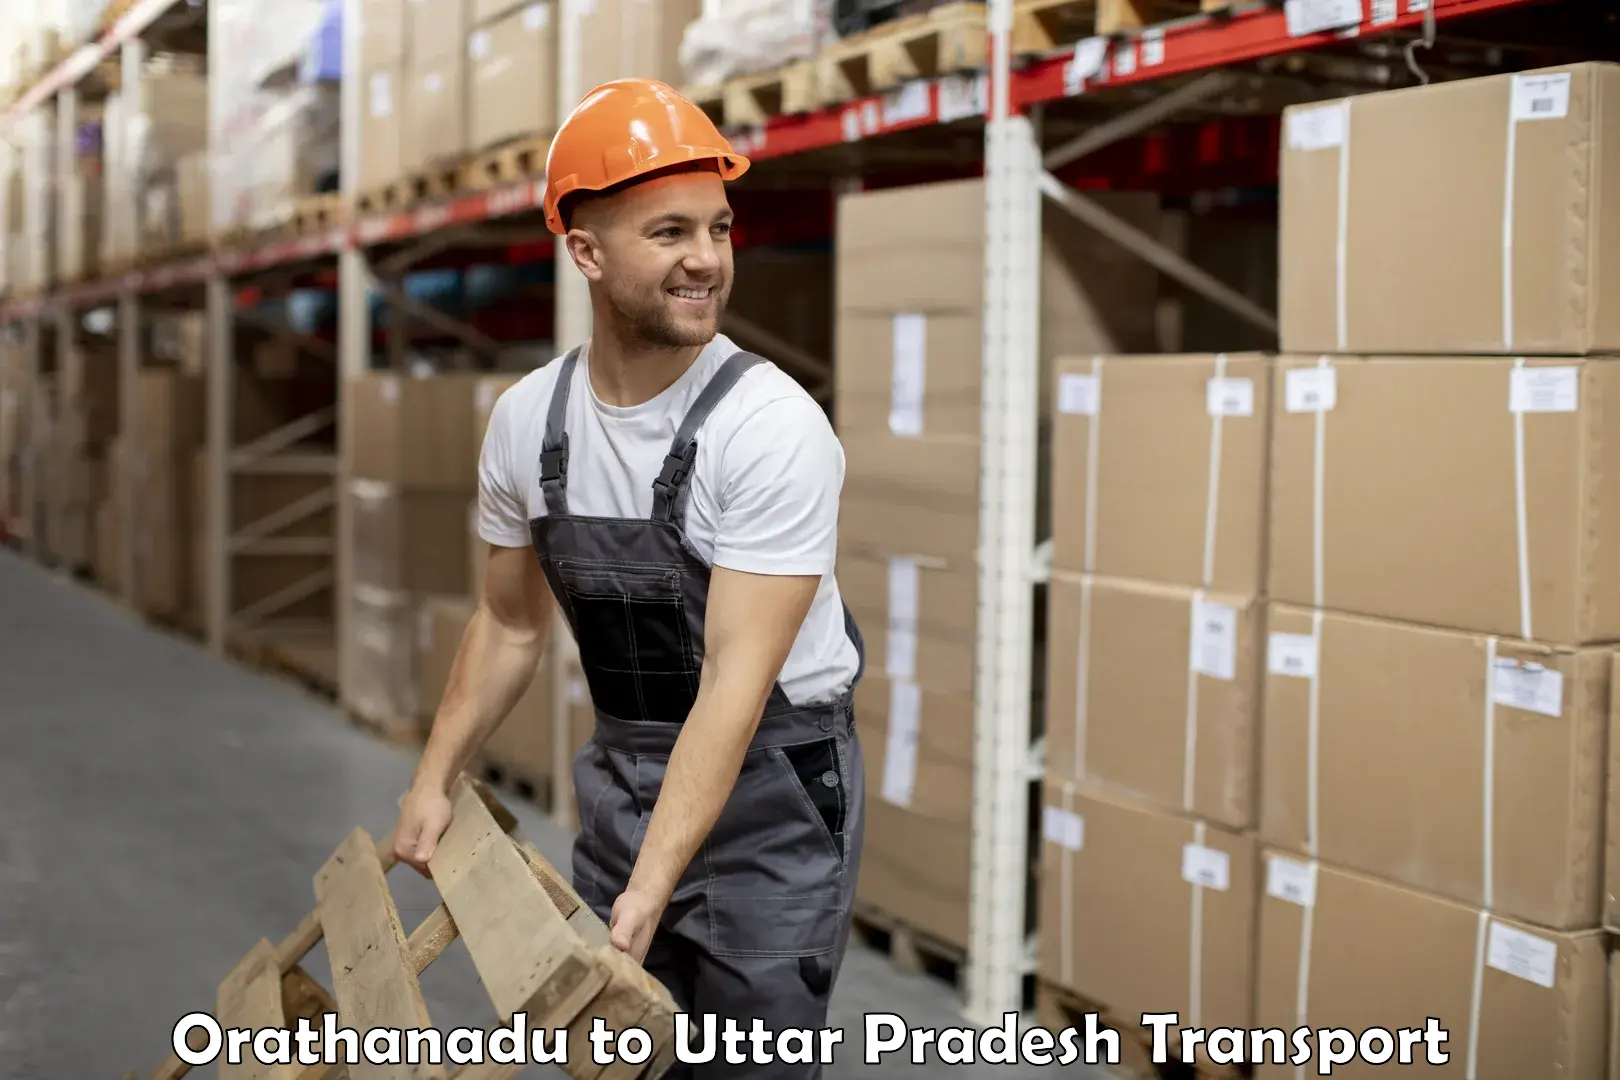 Delivery service Orathanadu to Chopan